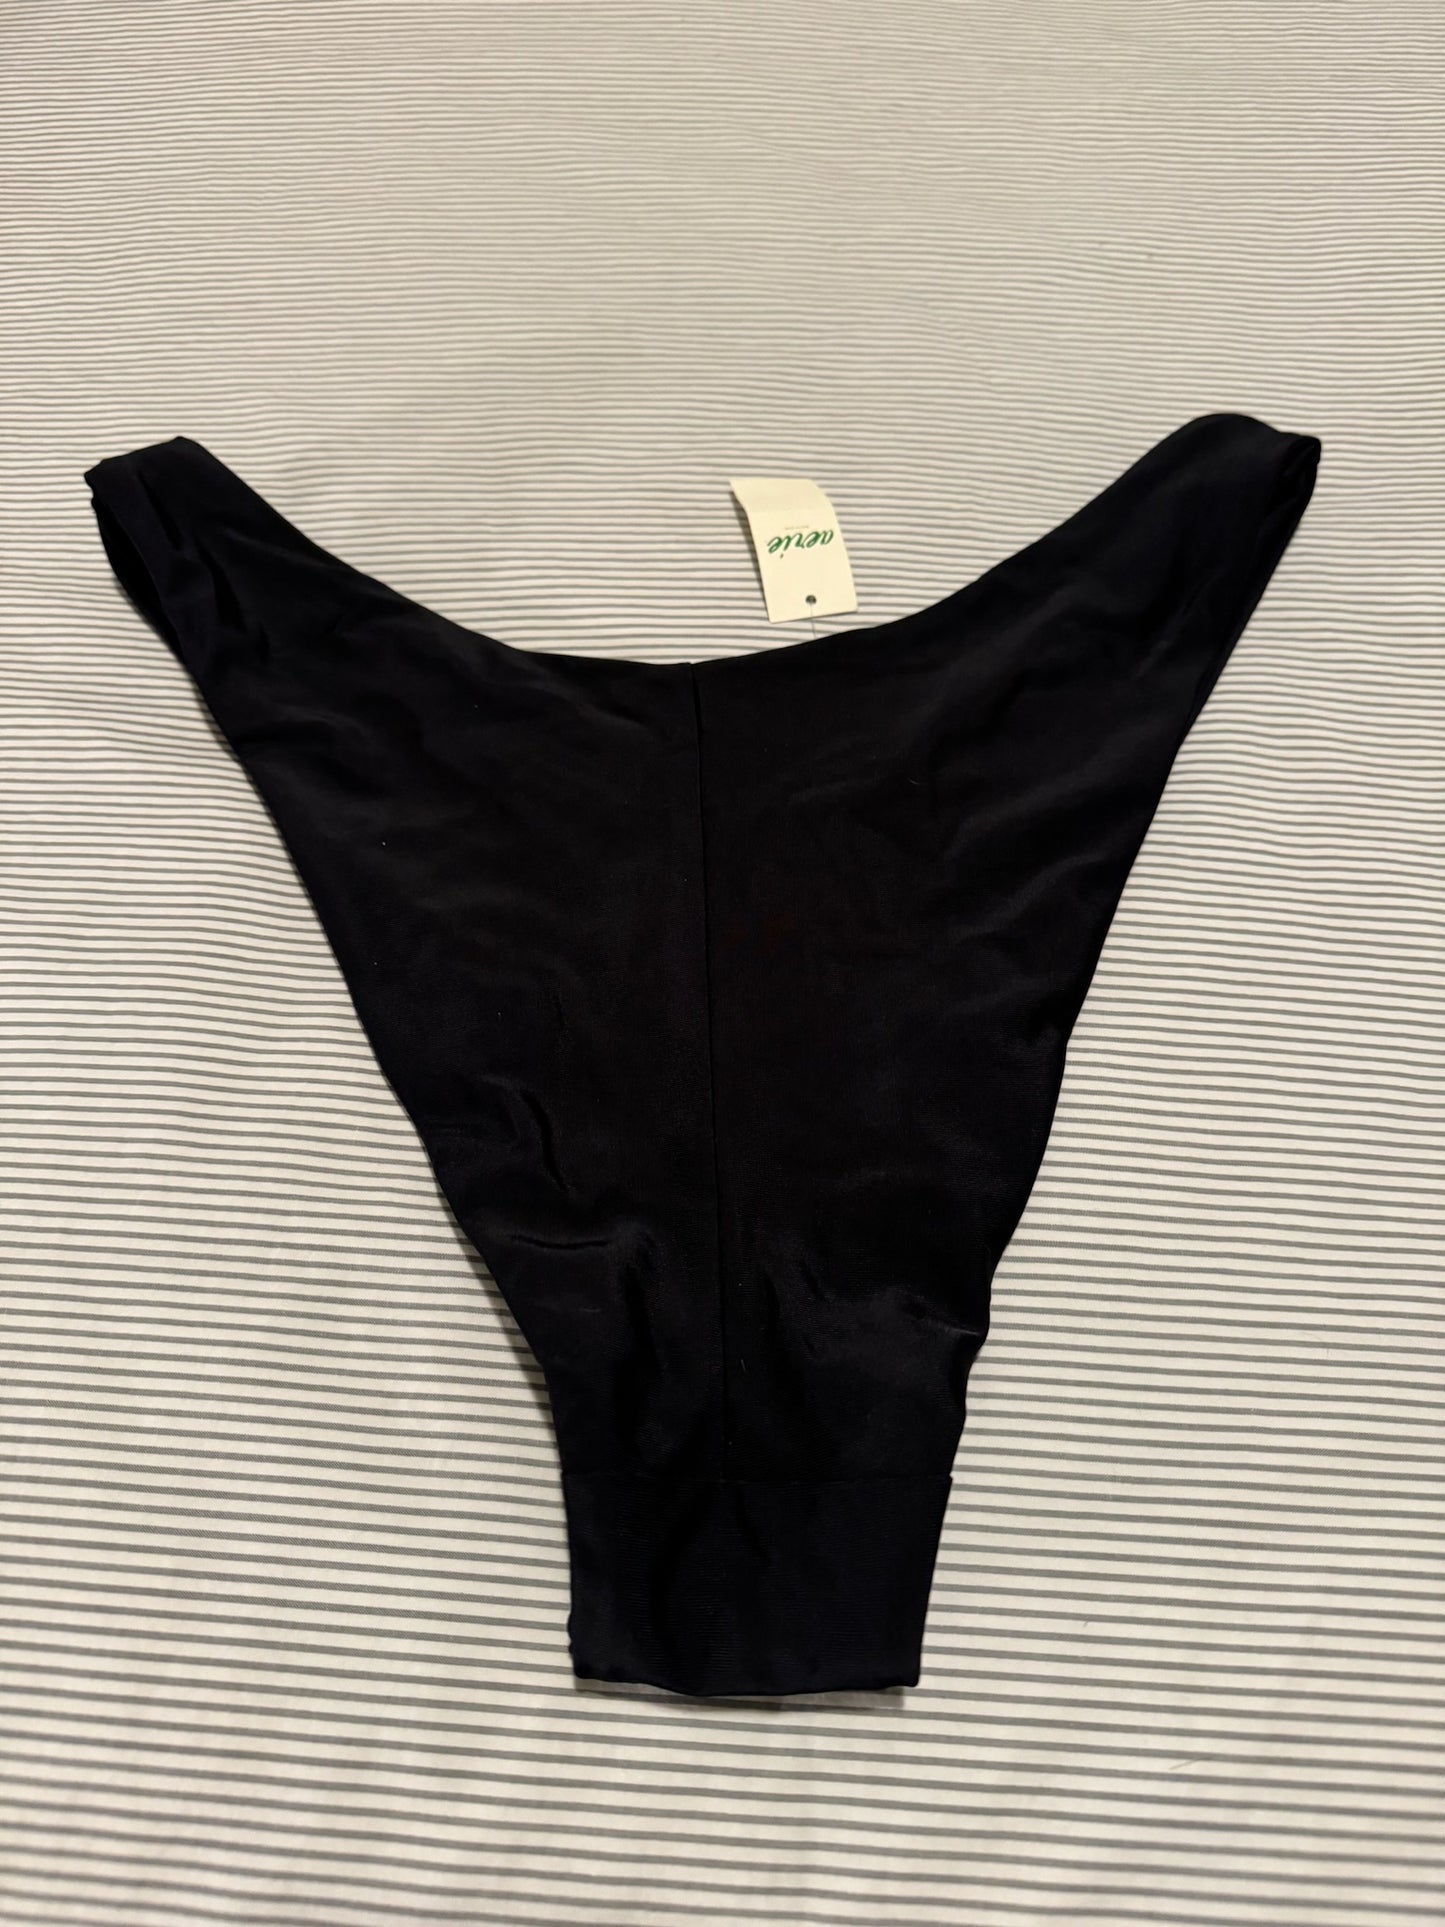 NWT Aerie Super High Cut Bikini Bottom Black Size Large